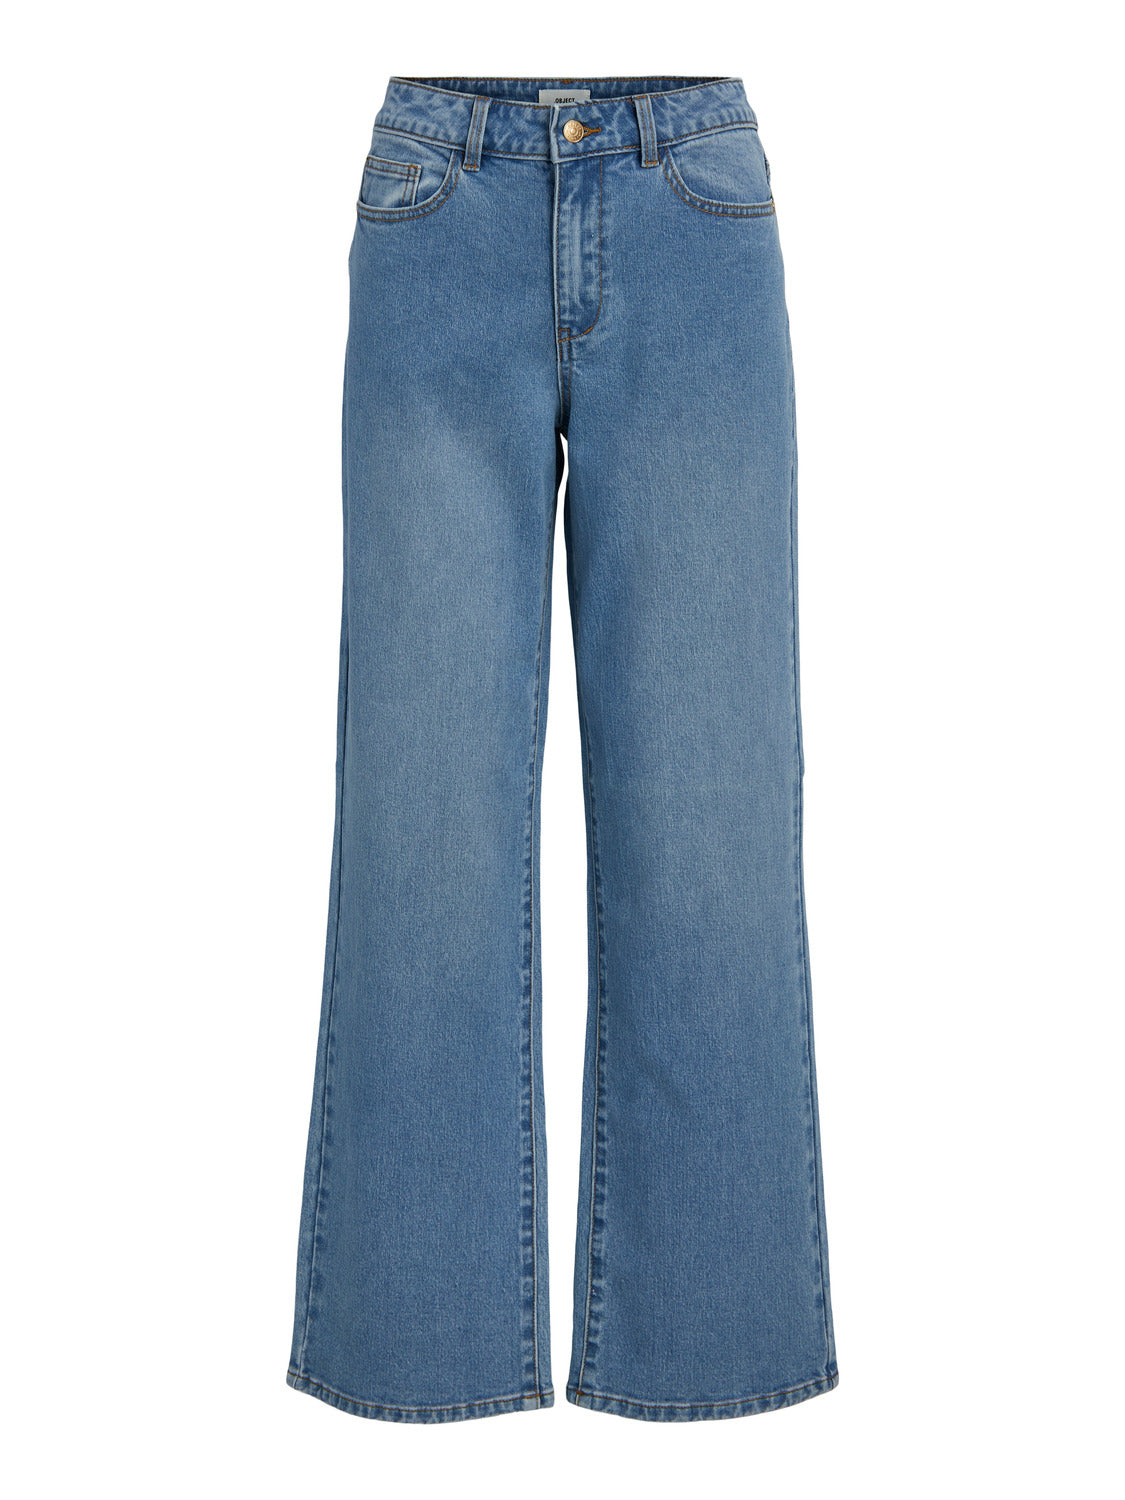 OBJMARINA Jeans - Light Blue Denim